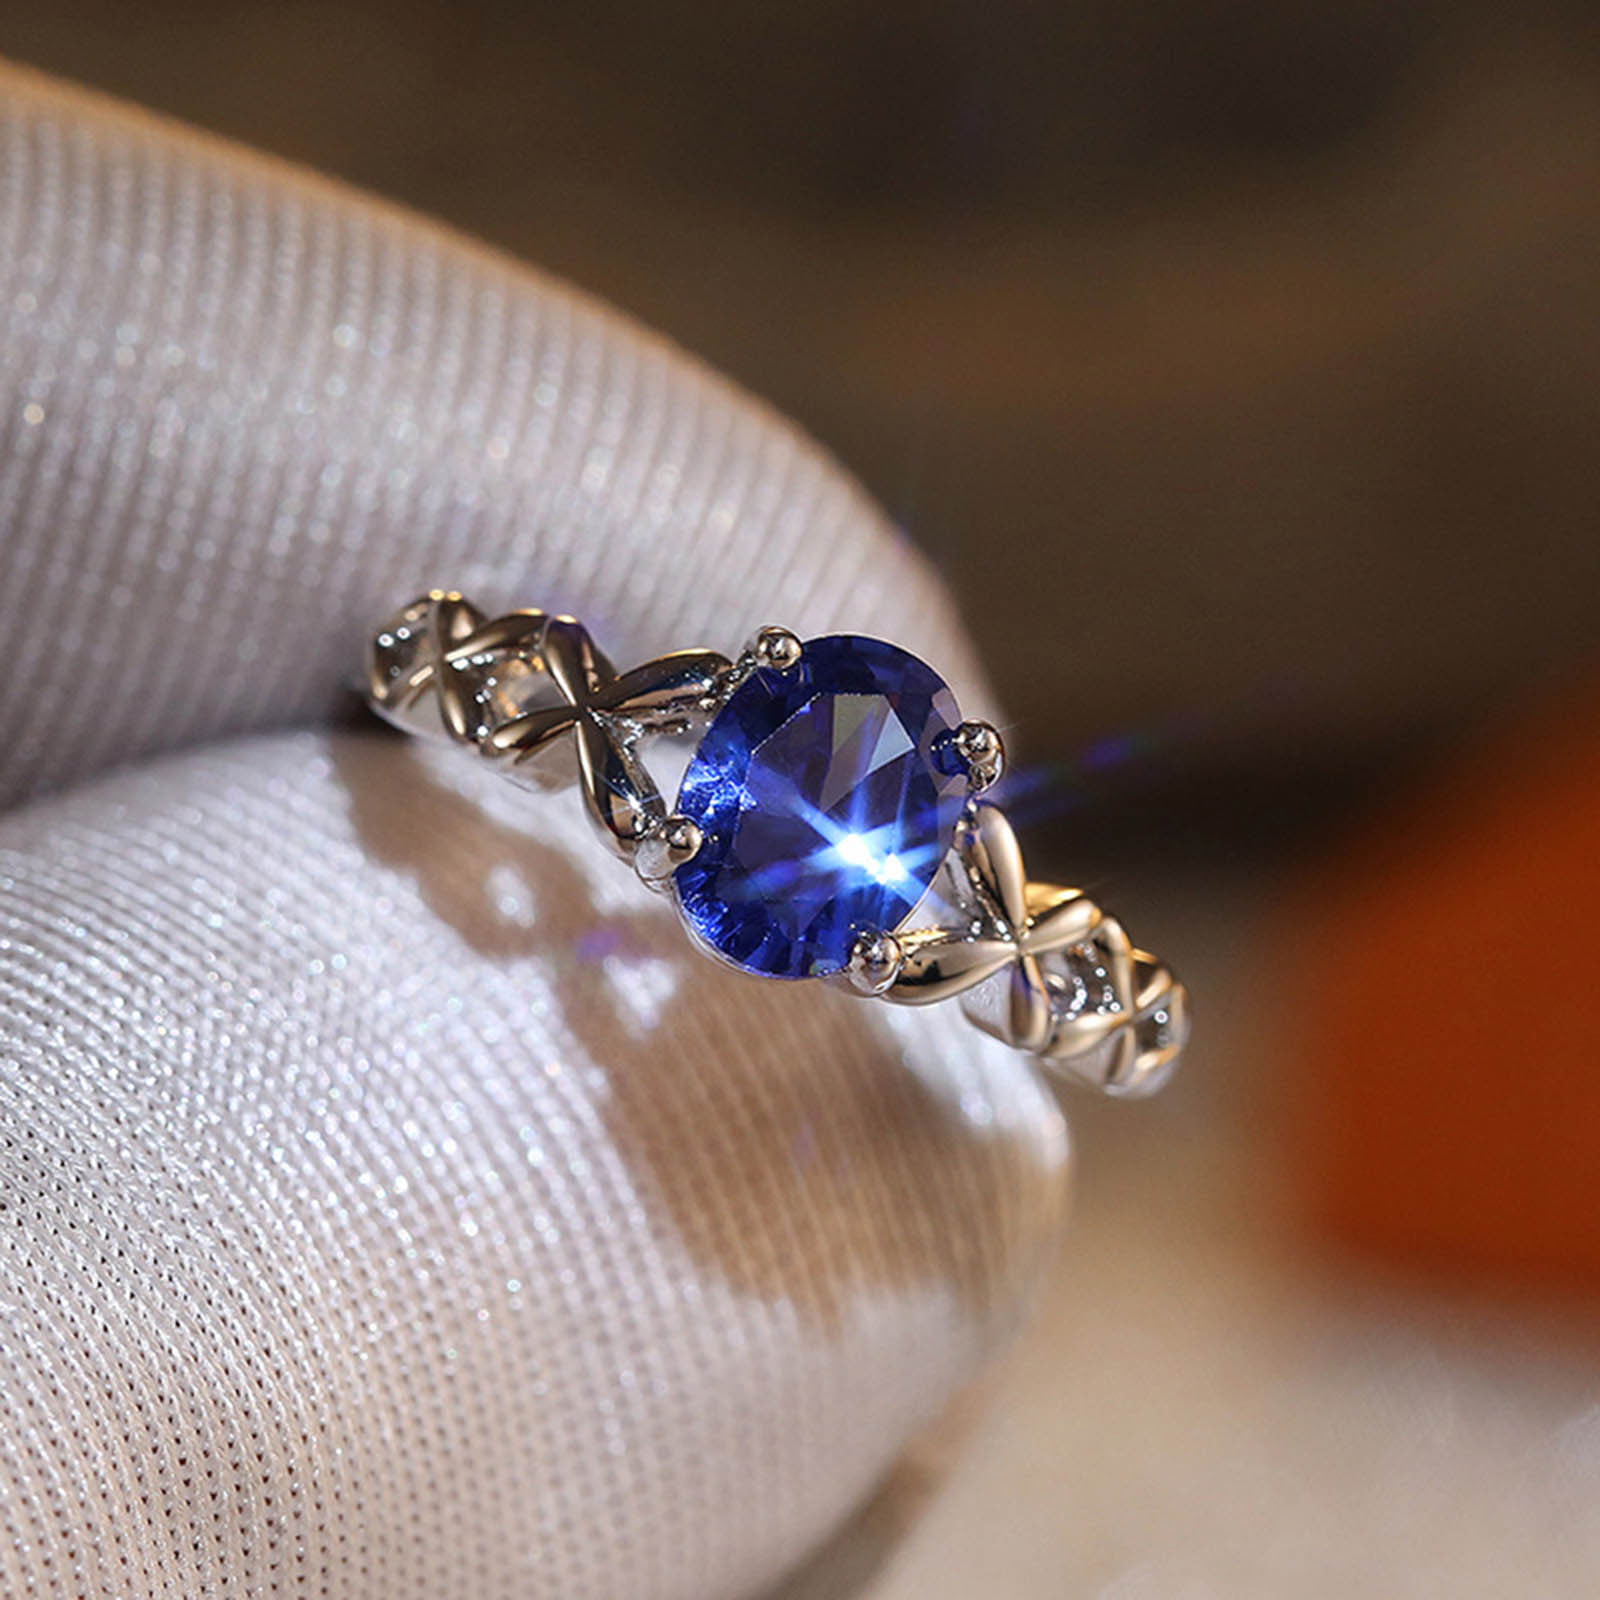 Blue Stone Diamond Ring On Lady Stock Photo 1928447960 | Shutterstock